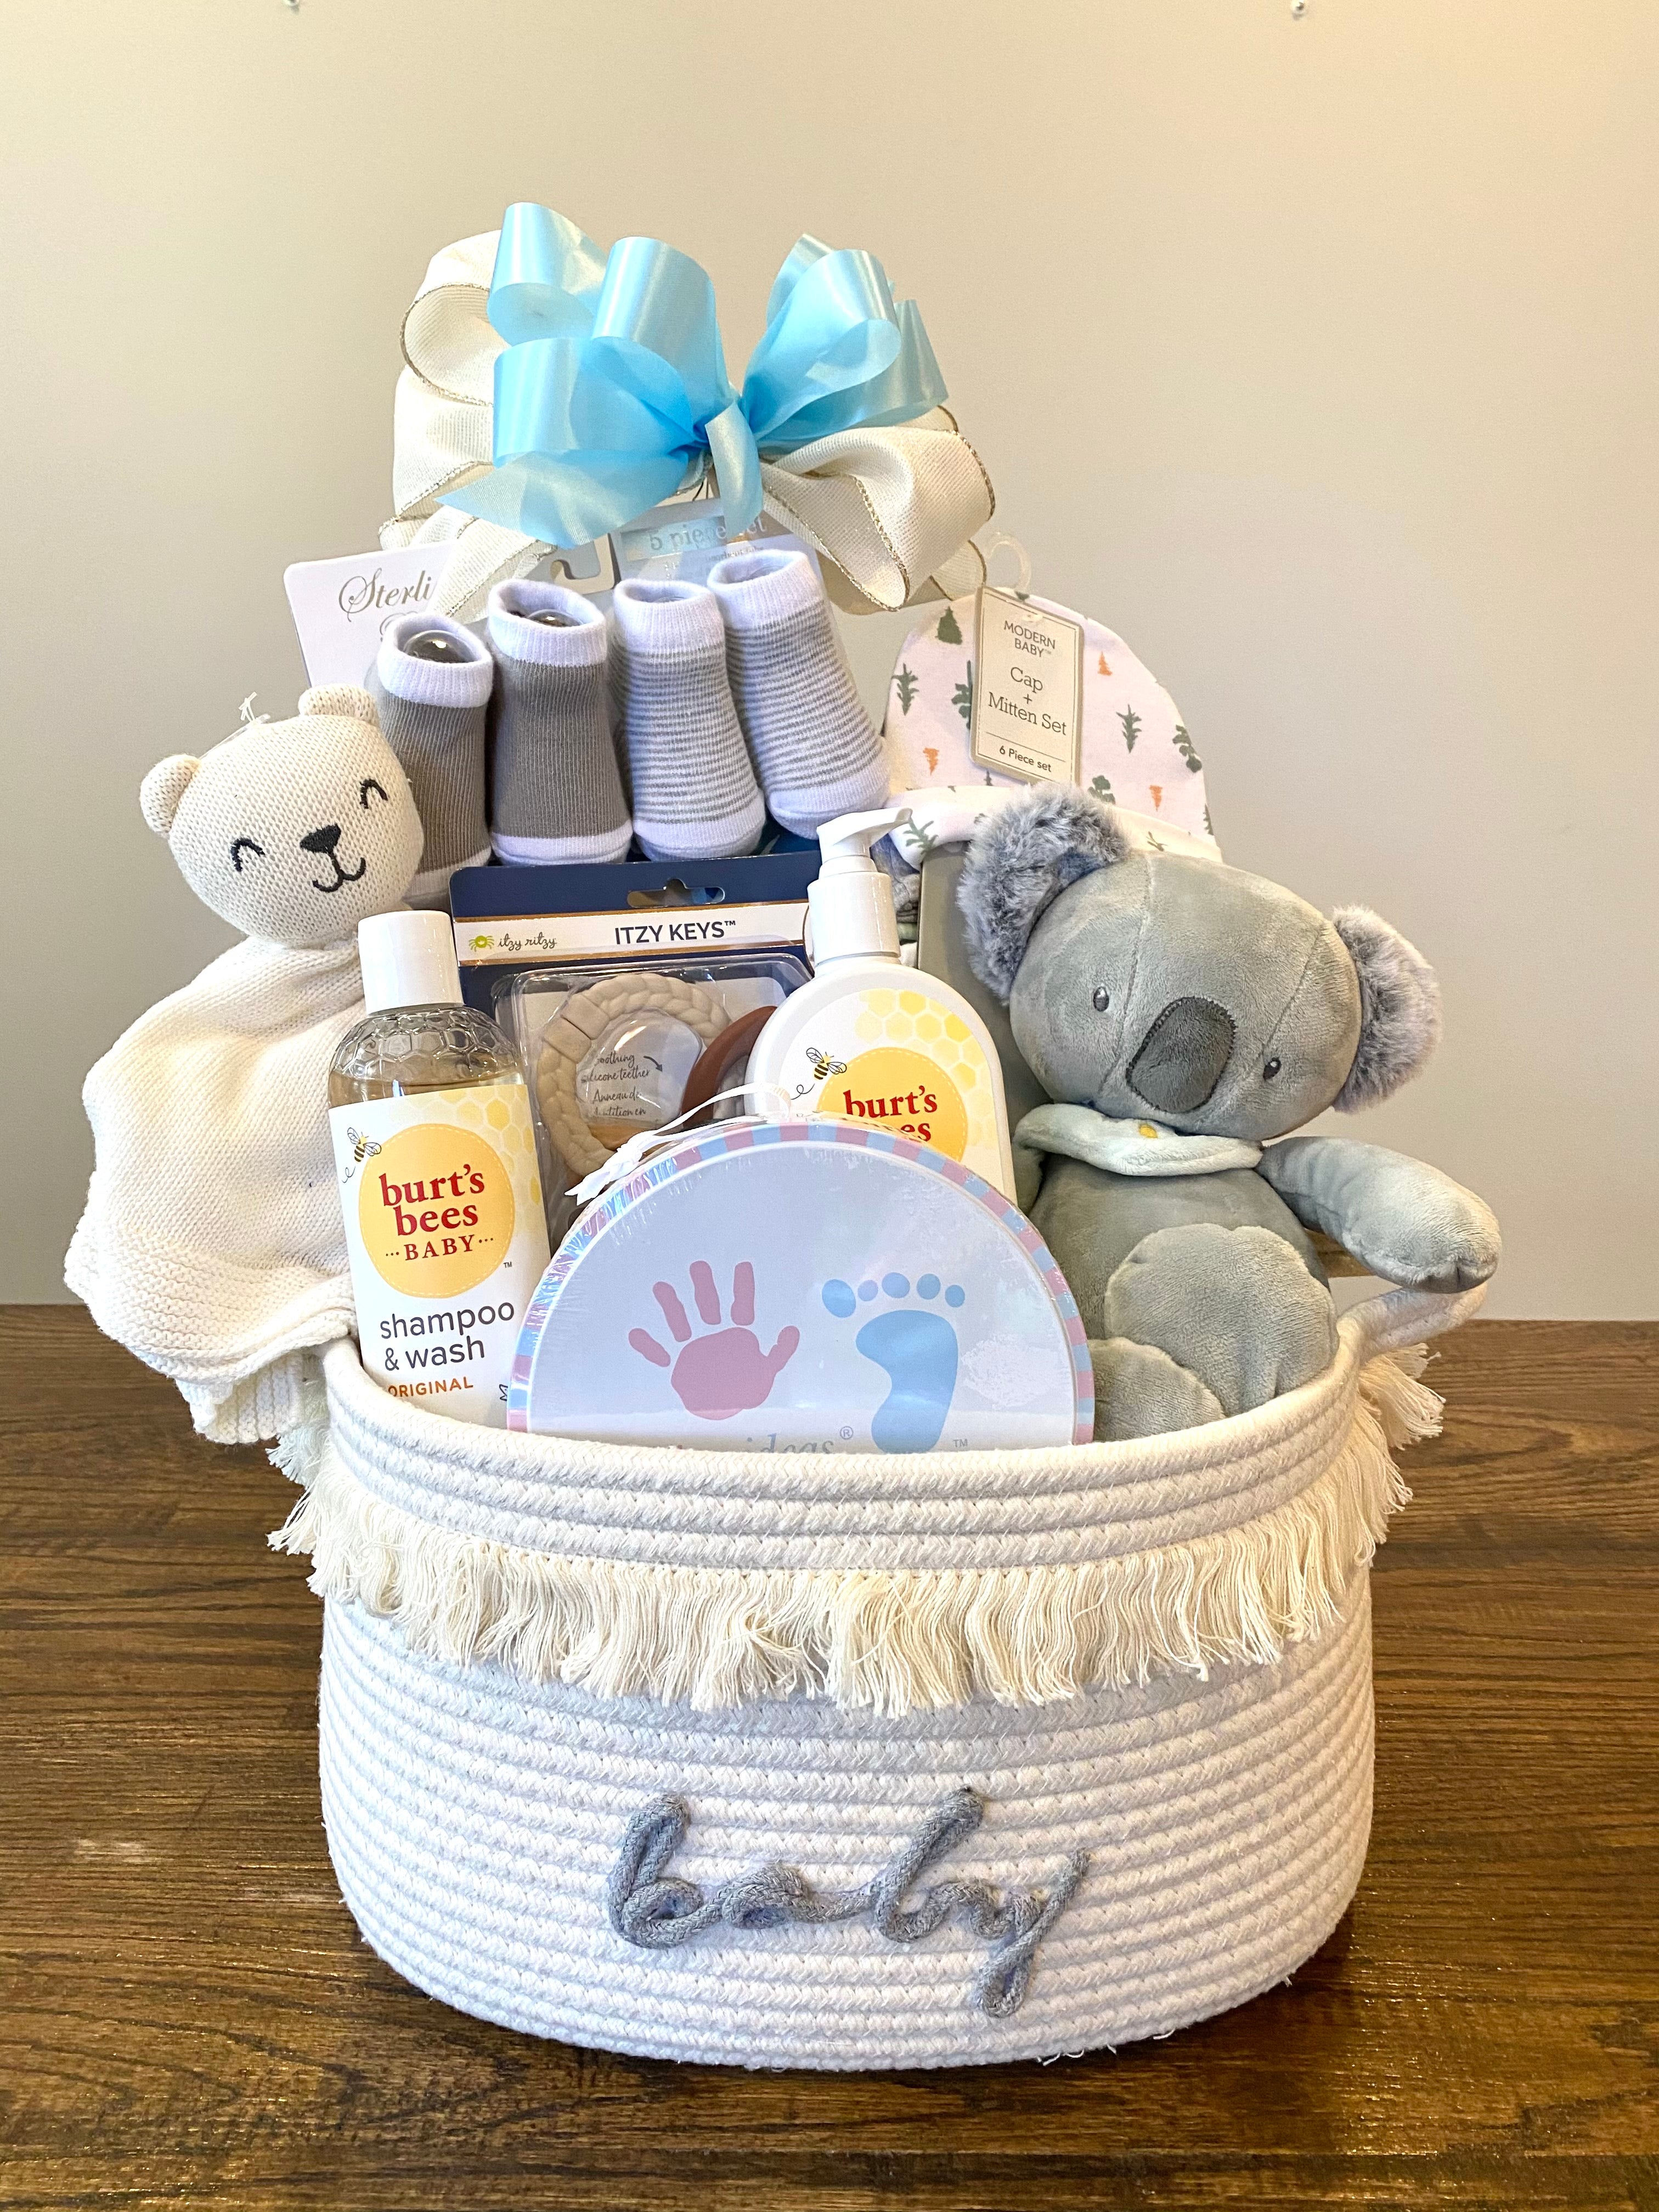 Baby Gift Baskets - Baby Girl Shower Basket